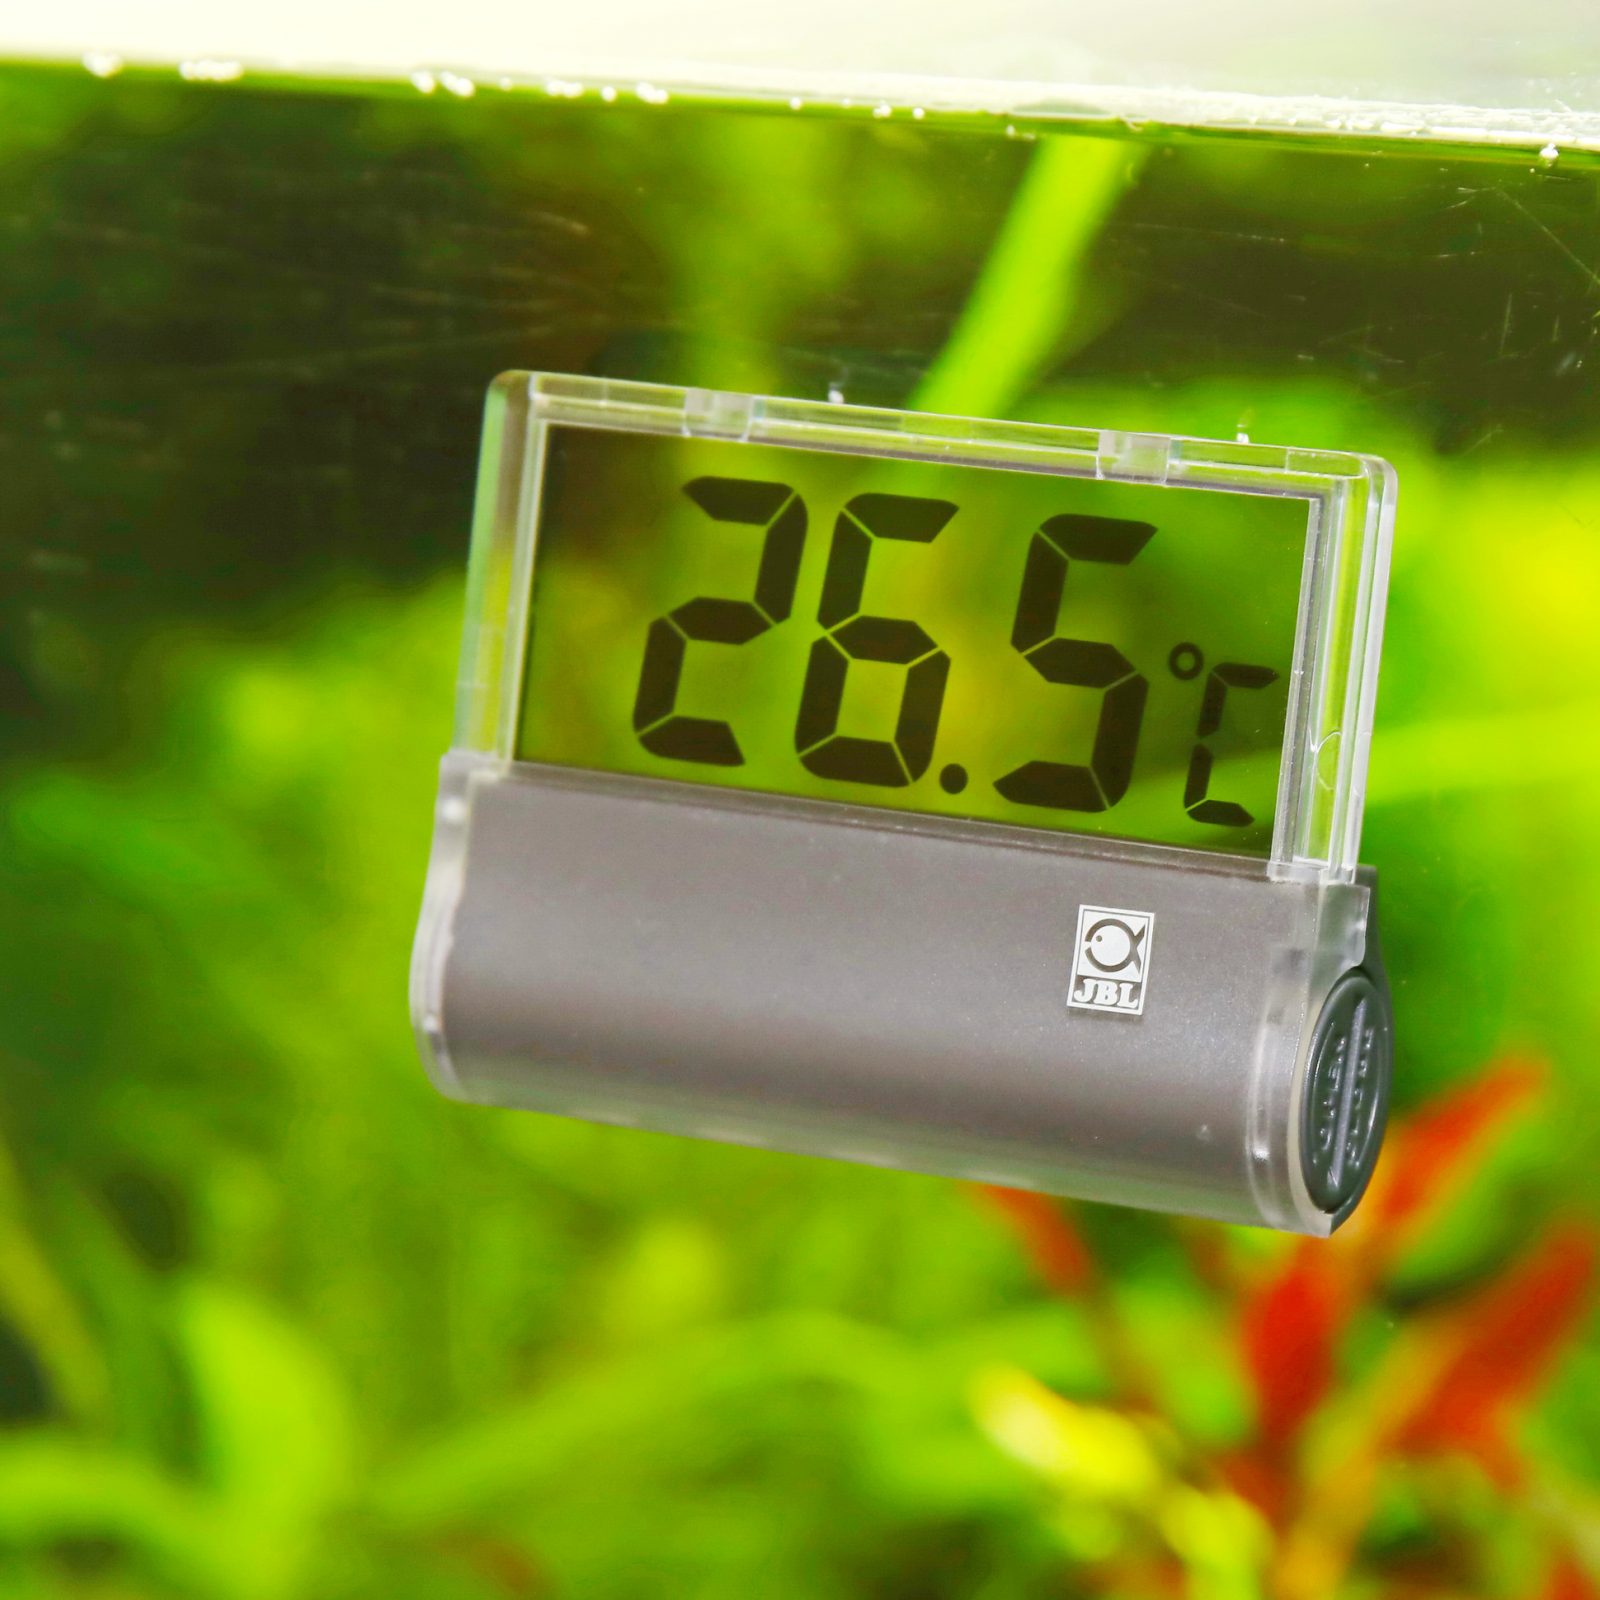 Neuheiten bei JBL: Aquarium Thermometer DigiScan & DigiScan Alarm